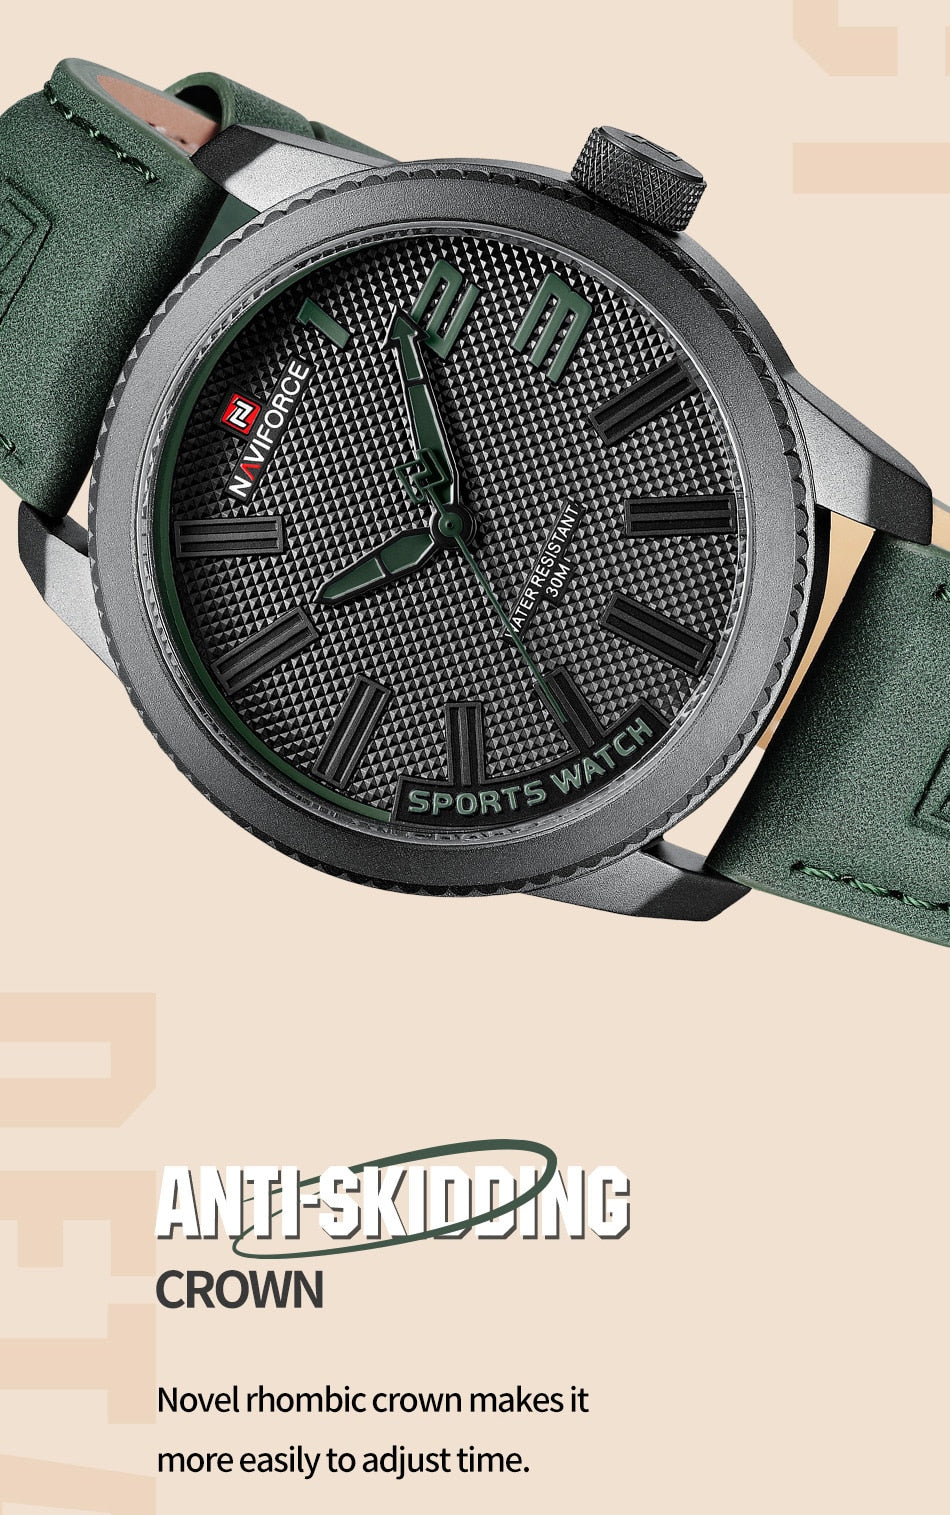 NAVIFORCE Popular Male Wristwatch Military Sports Shockproof Waterproof Leather Watch Men Fashion Casual Clock Relogio Masculino